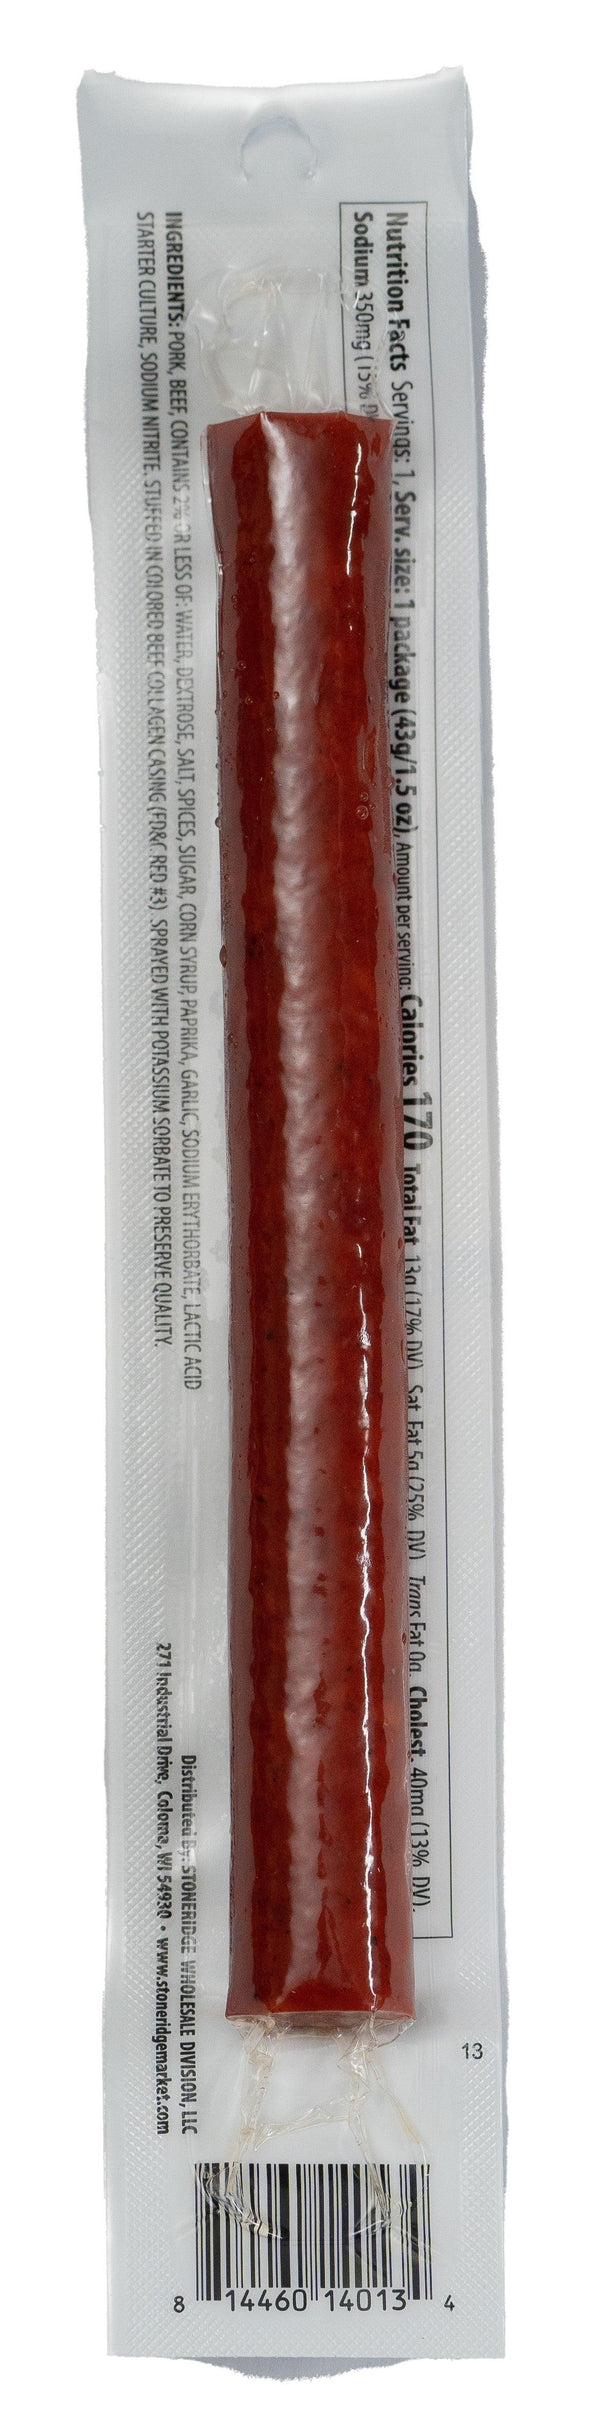 Mild Thick Stick 1.5 oz (15 pack) - StoneRidge Meats